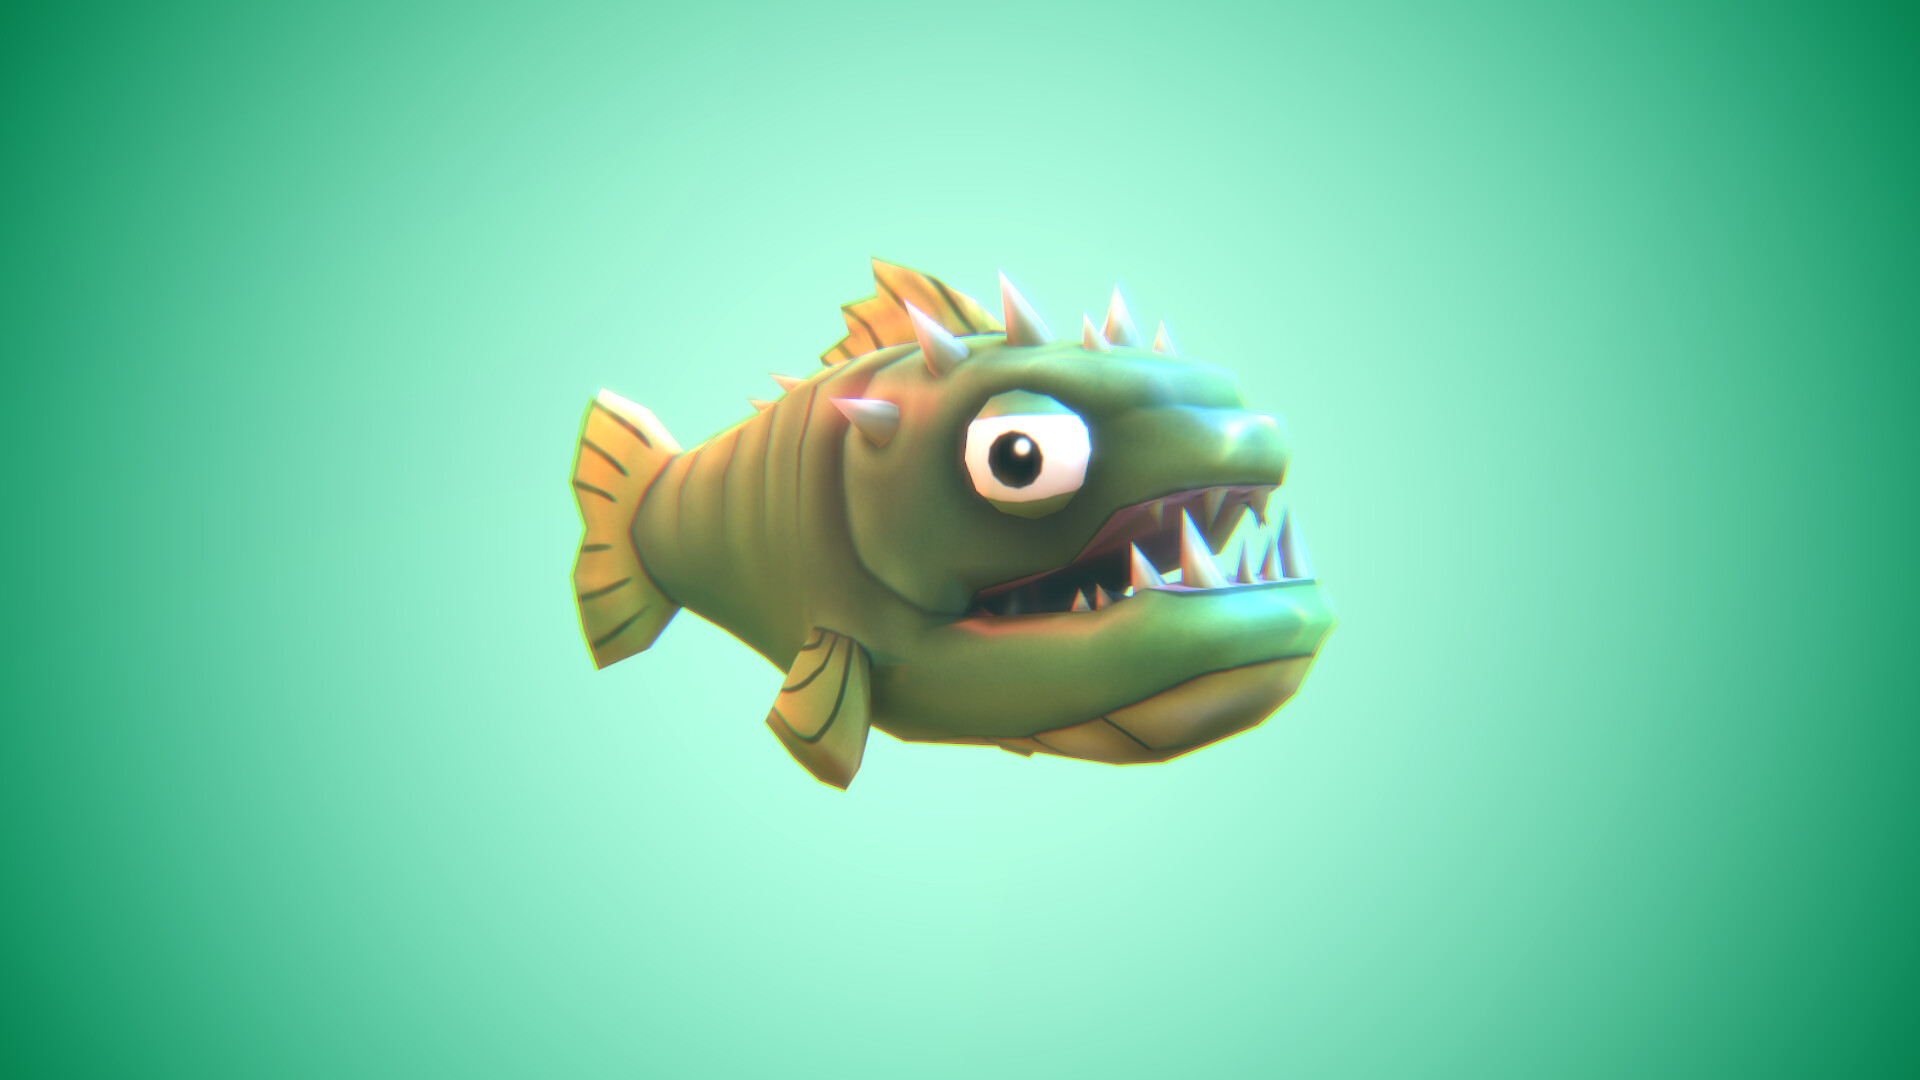 angry fish game